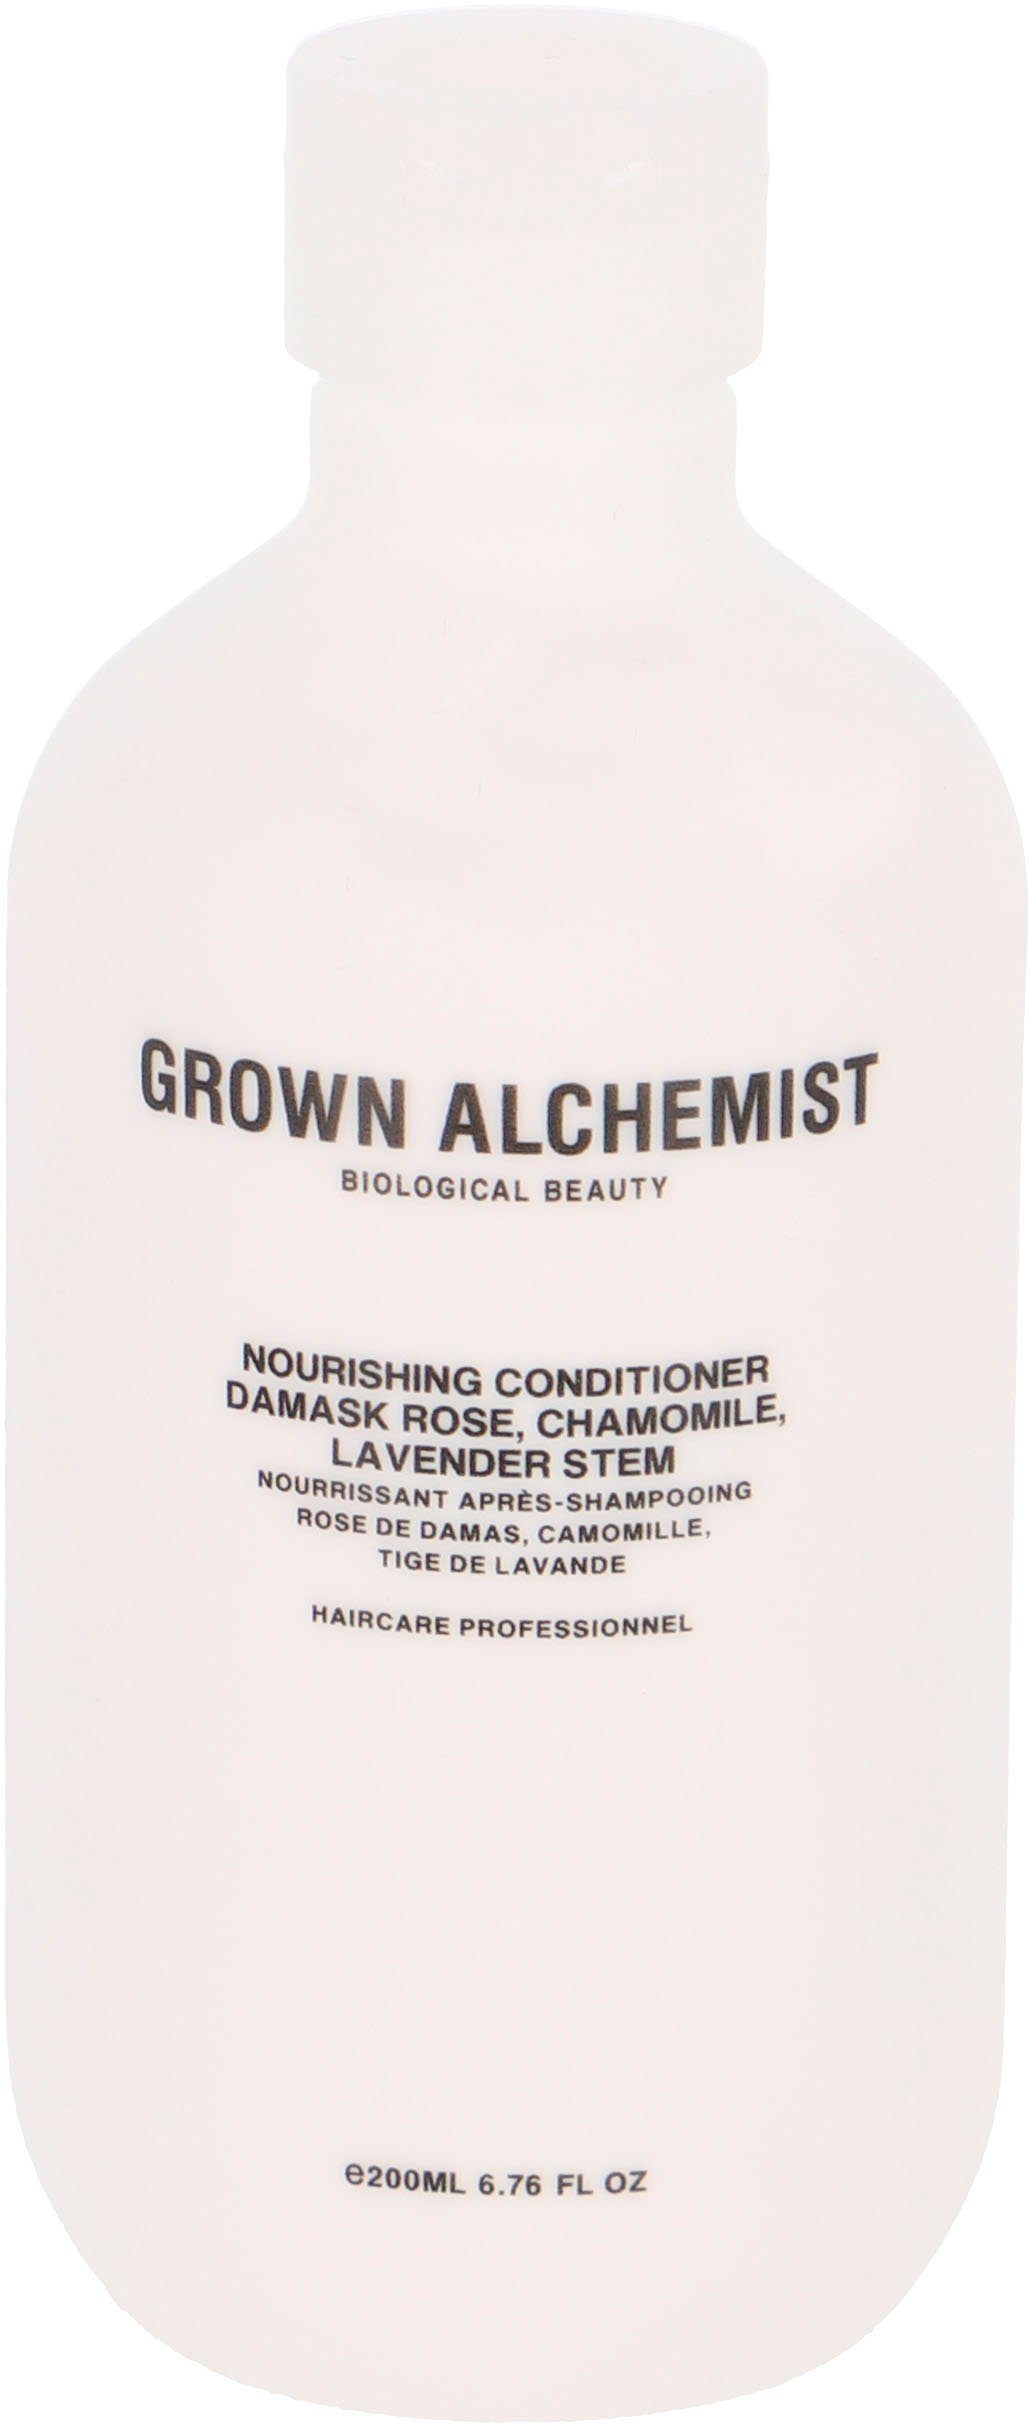 GROWN 0.6, Nourishing - Chamomile, Damask Rose, Stem Lavender Conditioner ALCHEMIST Haarspülung